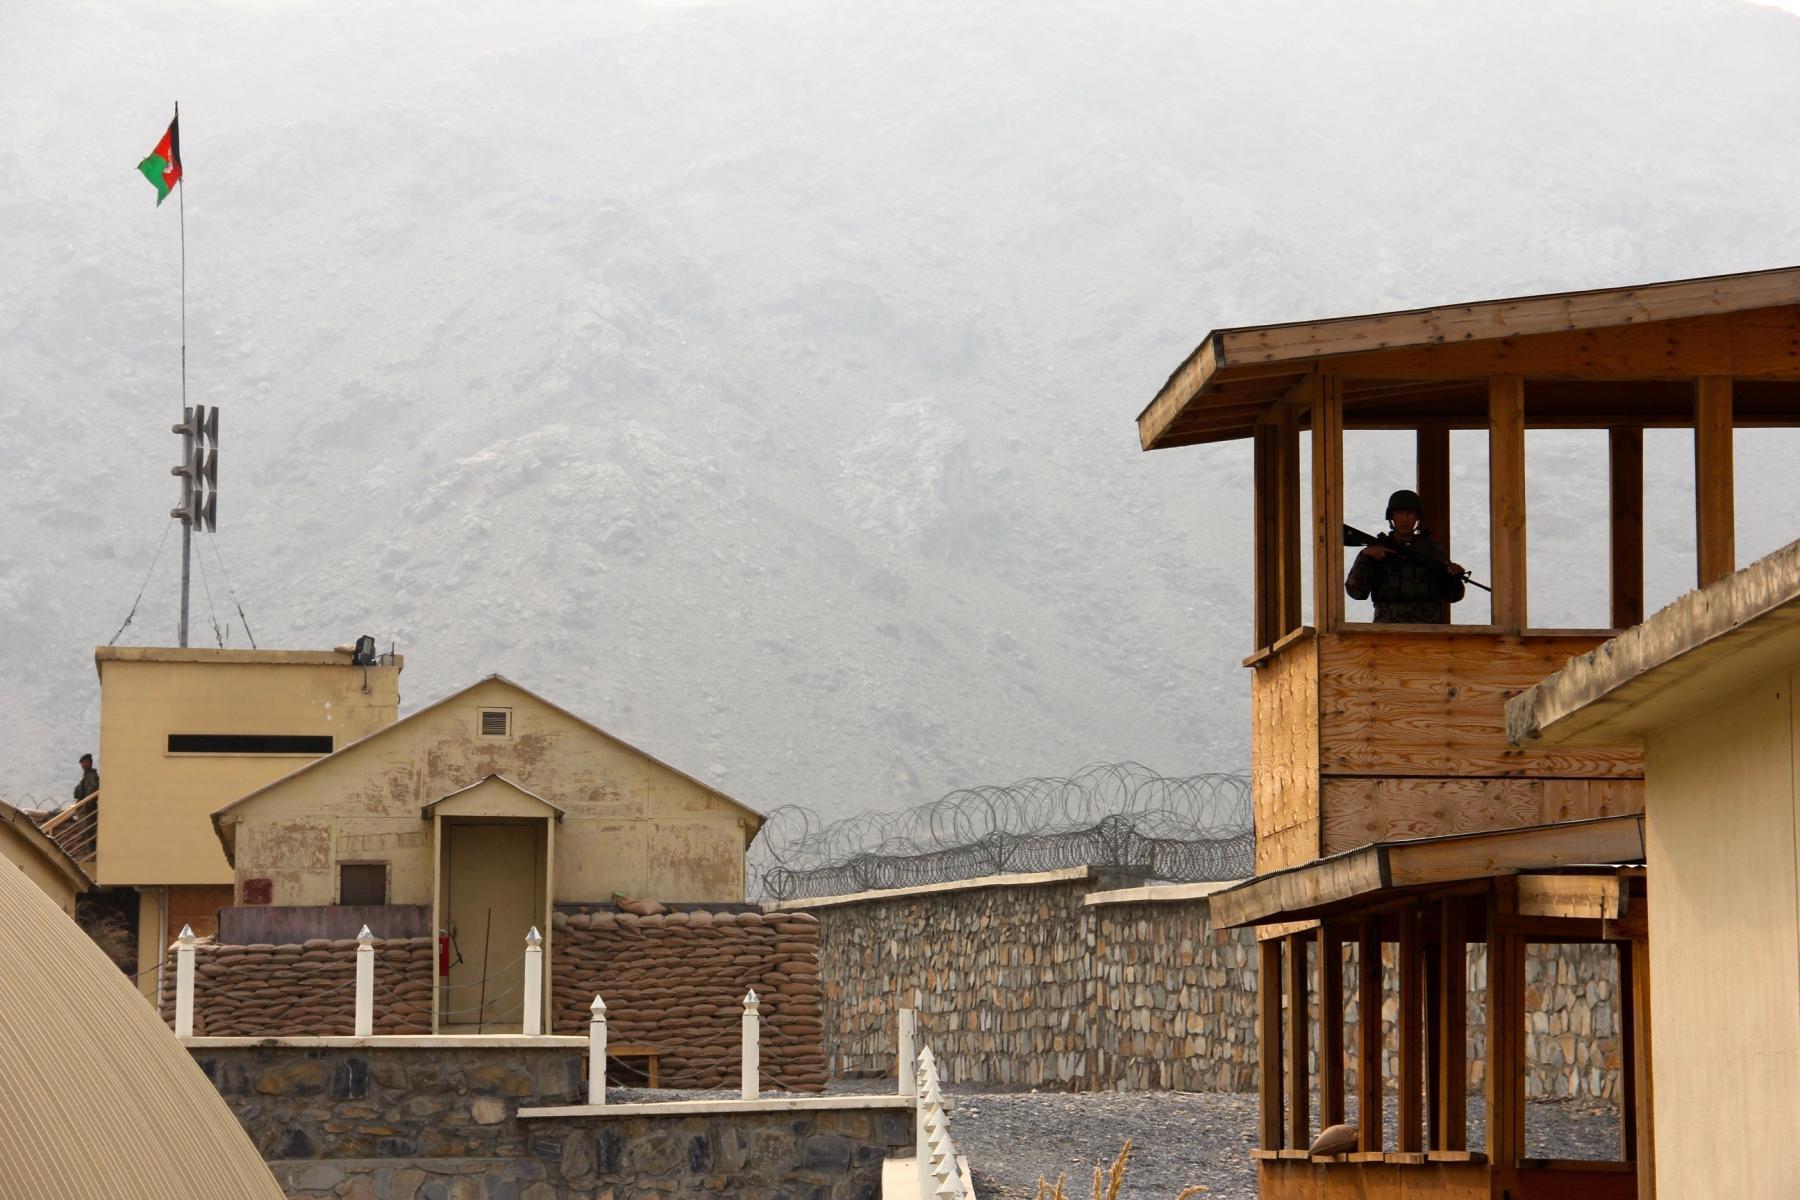 Torkham Gate at the Afghanistan-Pakistan border